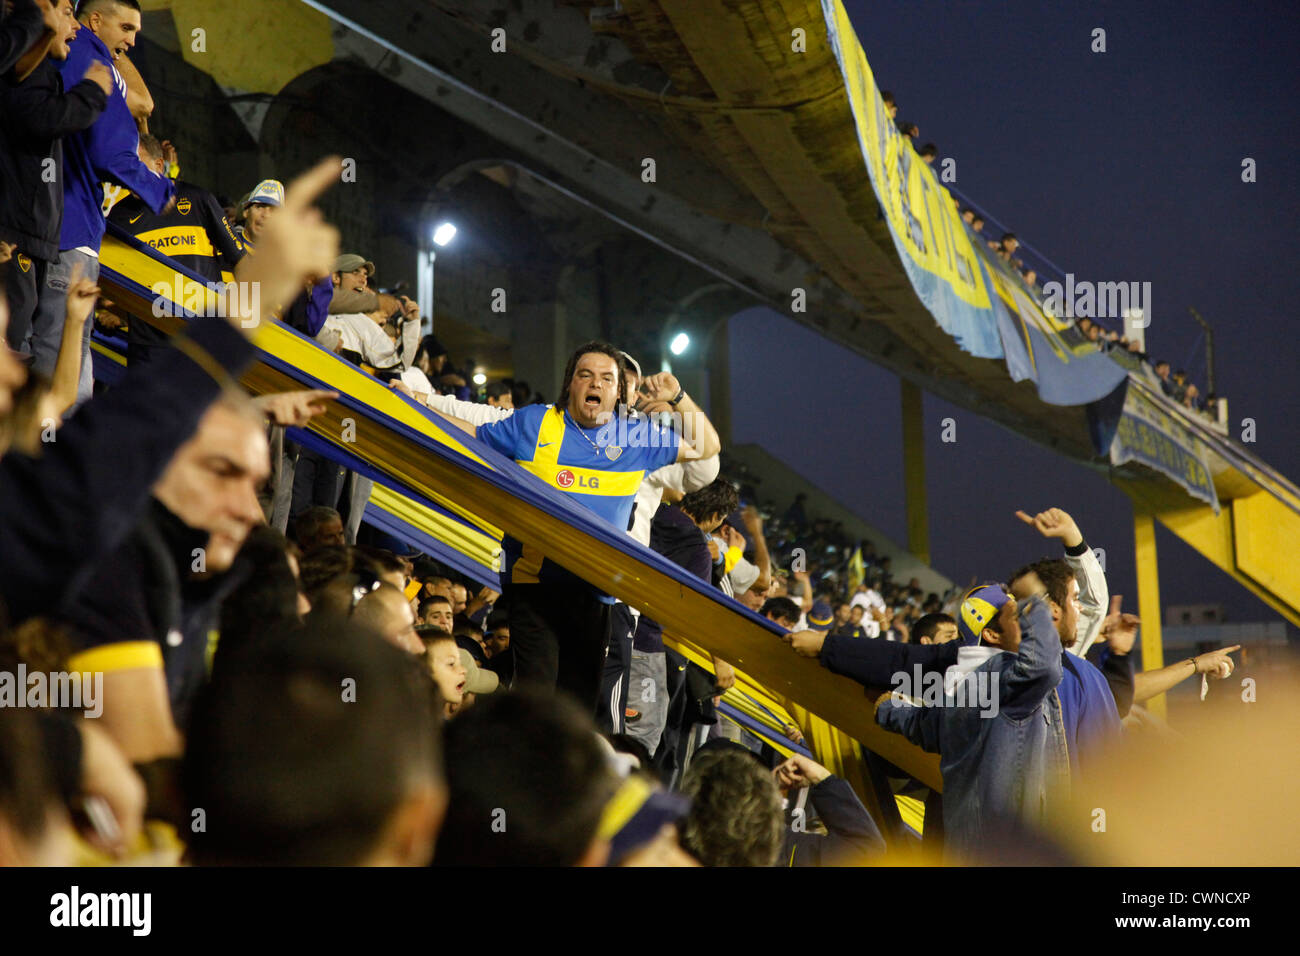 Partita di calcio del Boca Juniors alla Bombonera stadium, La Boca, Buenos Aires, Argentina. Foto Stock